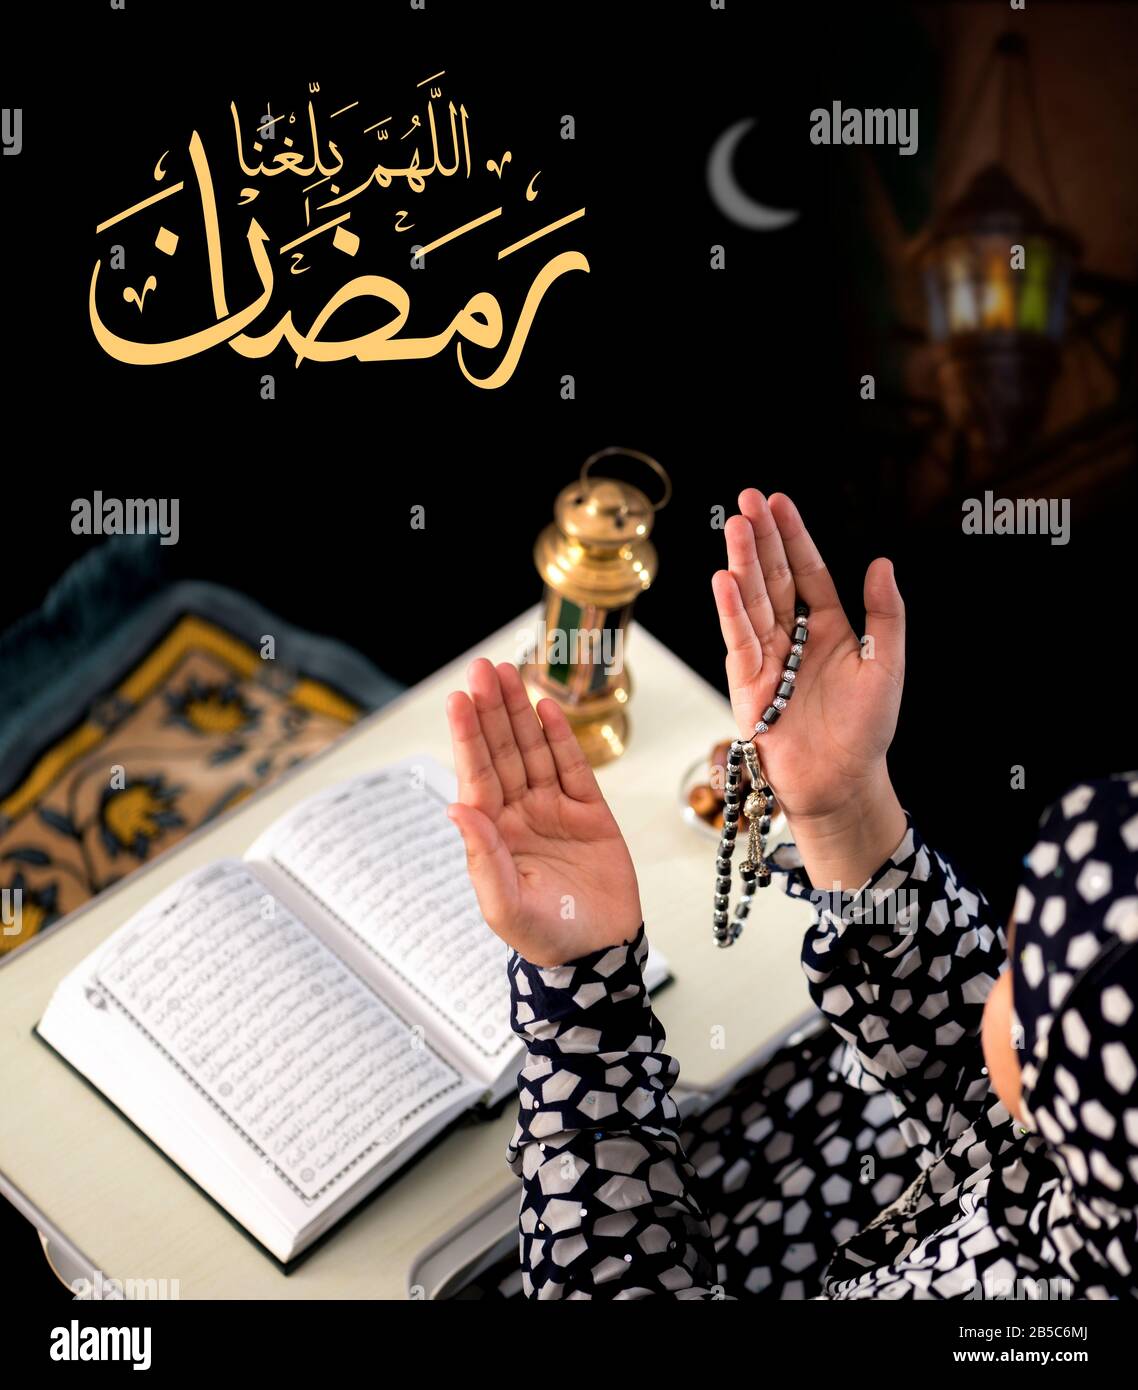 Niña musulmana Levantando Las Manos para la oración sobre fondo negro, con texto de caligrafía árabe Diciendo 'Dios, ayúdanos a alcanzar Ramadán' Foto de stock